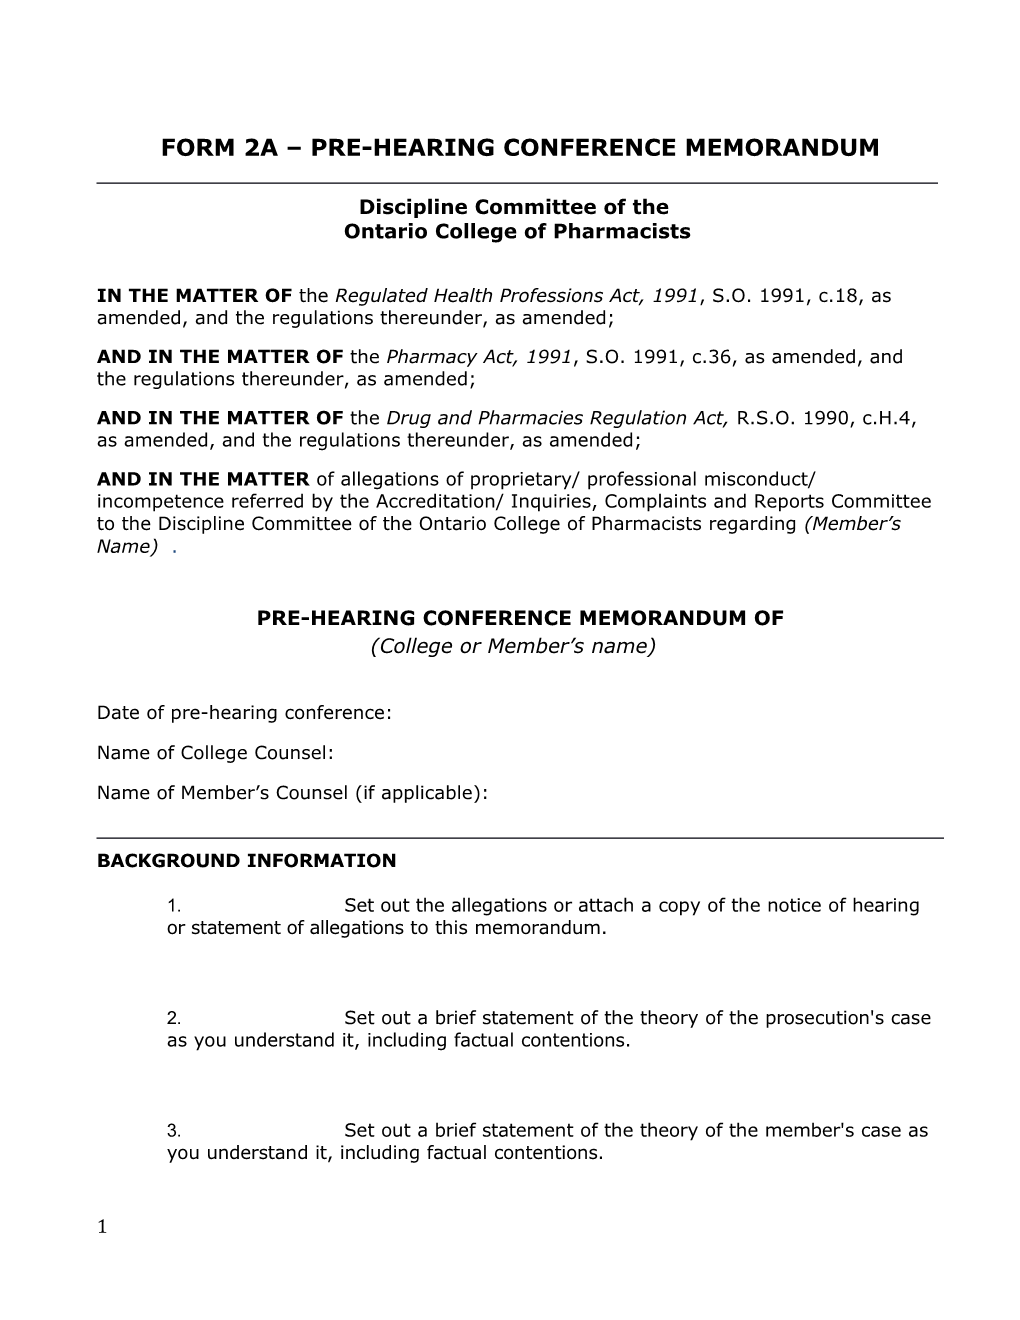 Form 2A Pre-Hearing Conference Memorandum